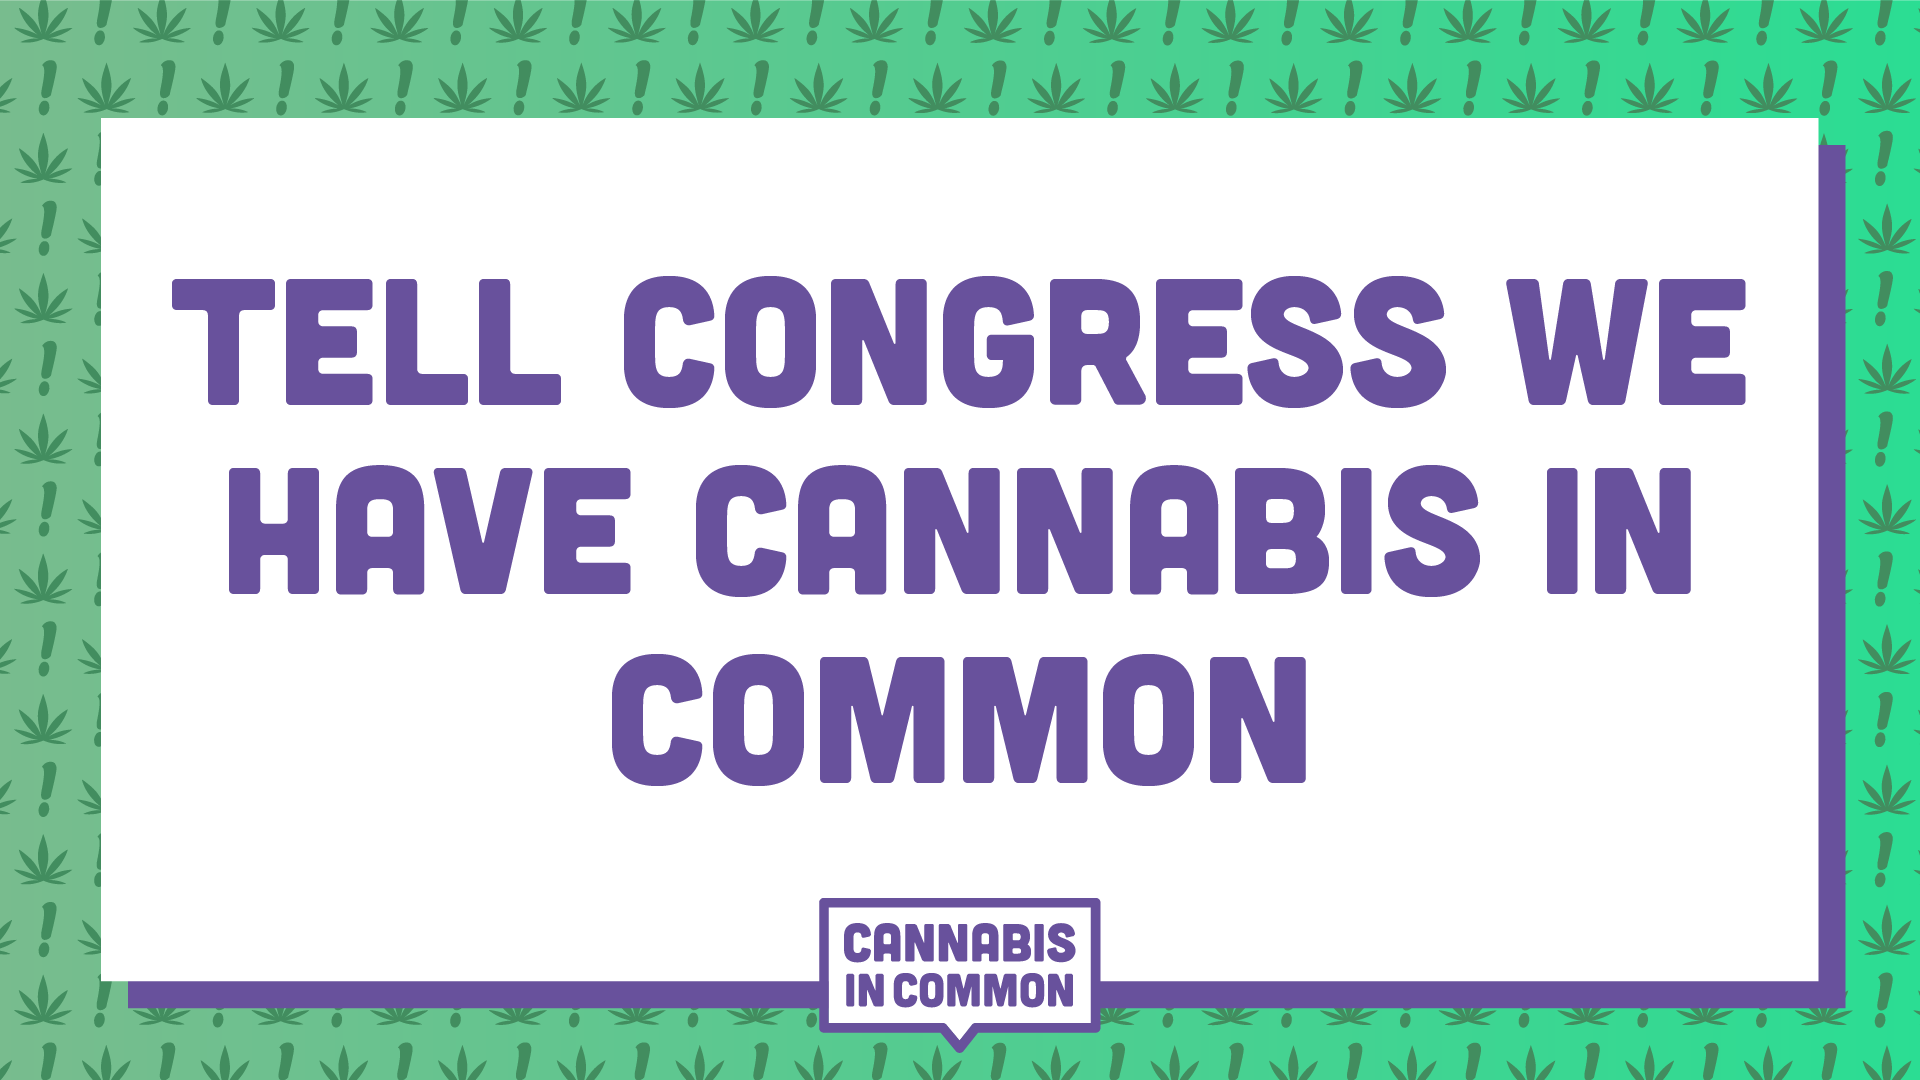 www.cannabisincommon.org